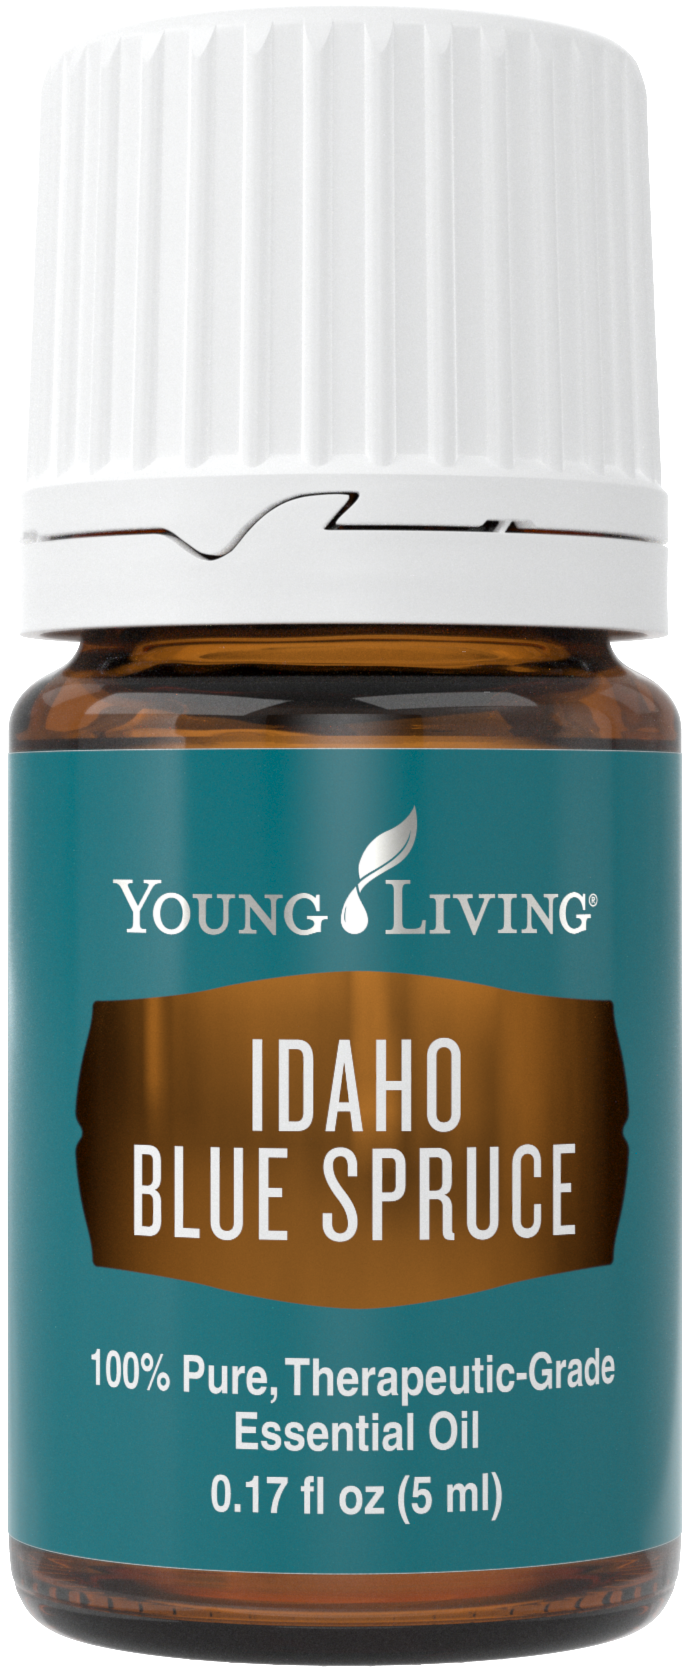 Idaho Blue Spruce 5ml Silo.png